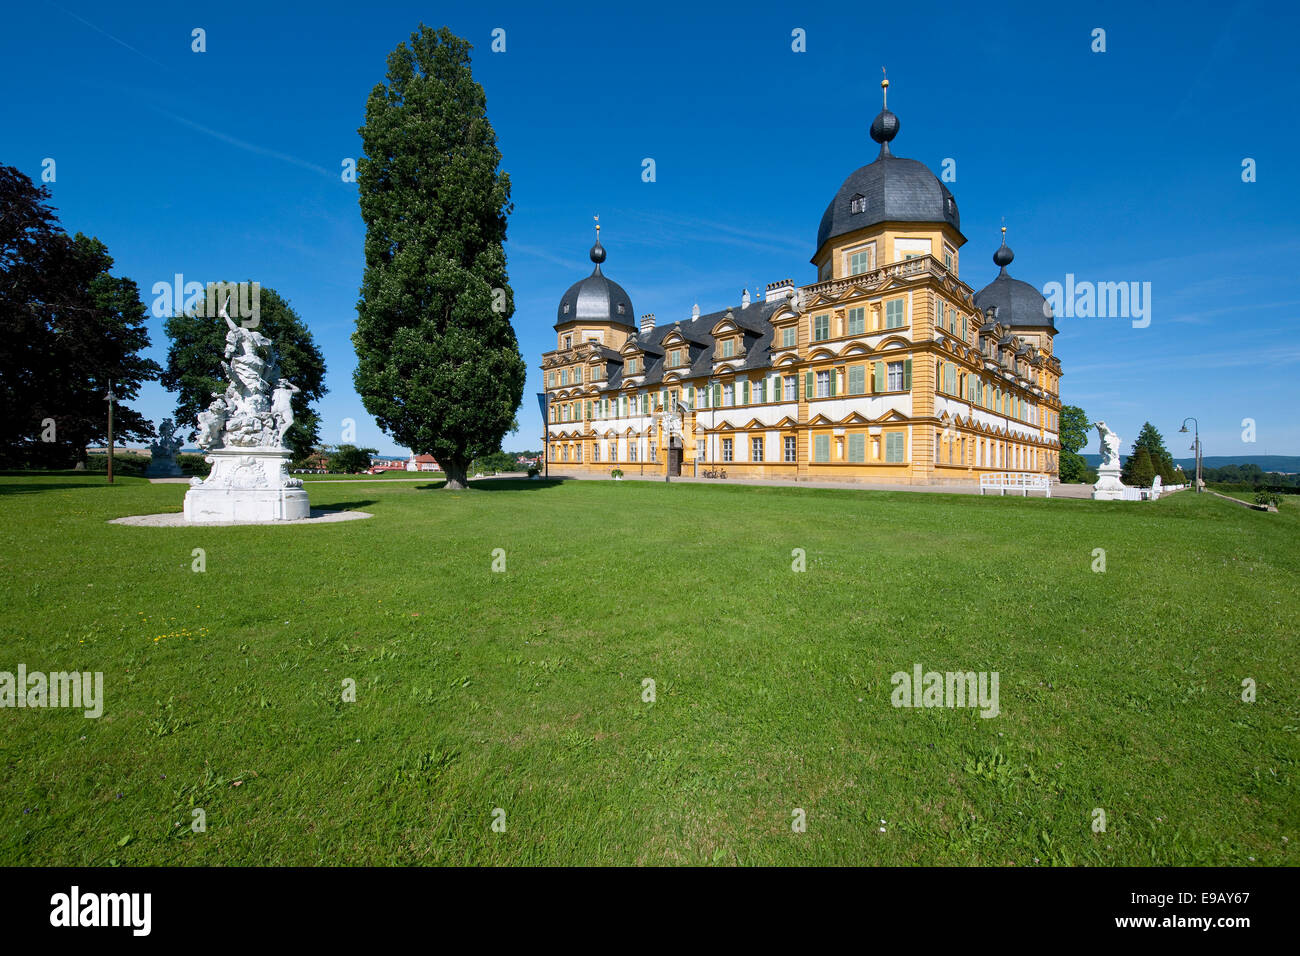 Schloss Seehof castello, Memmelsdorf, Baviera, Germania Foto Stock